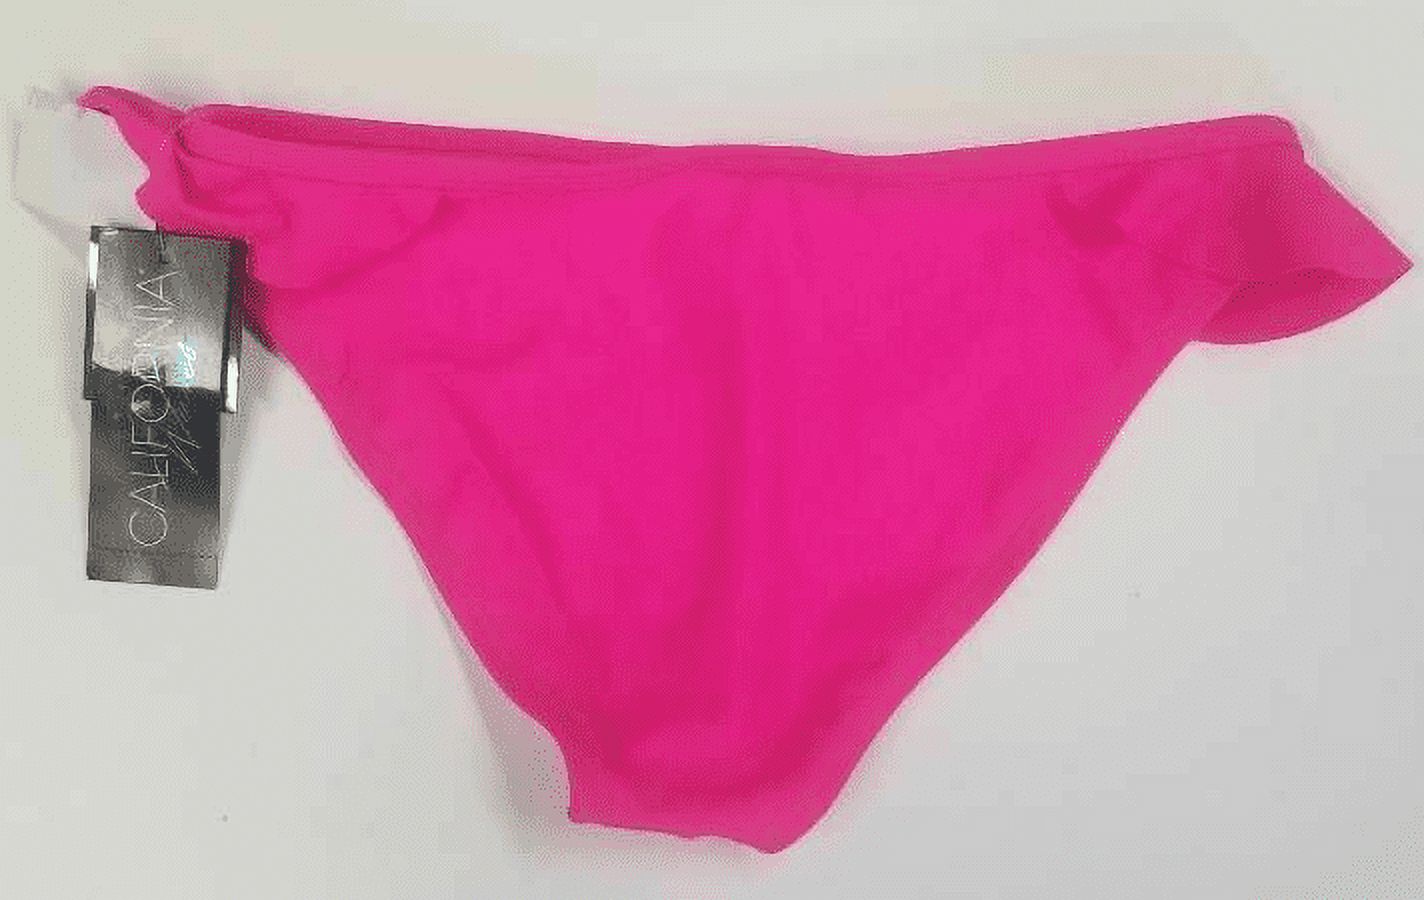 California Waves Womens Ruffled Hipster Swim Bottom Separates Pink XL - image 3 of 3